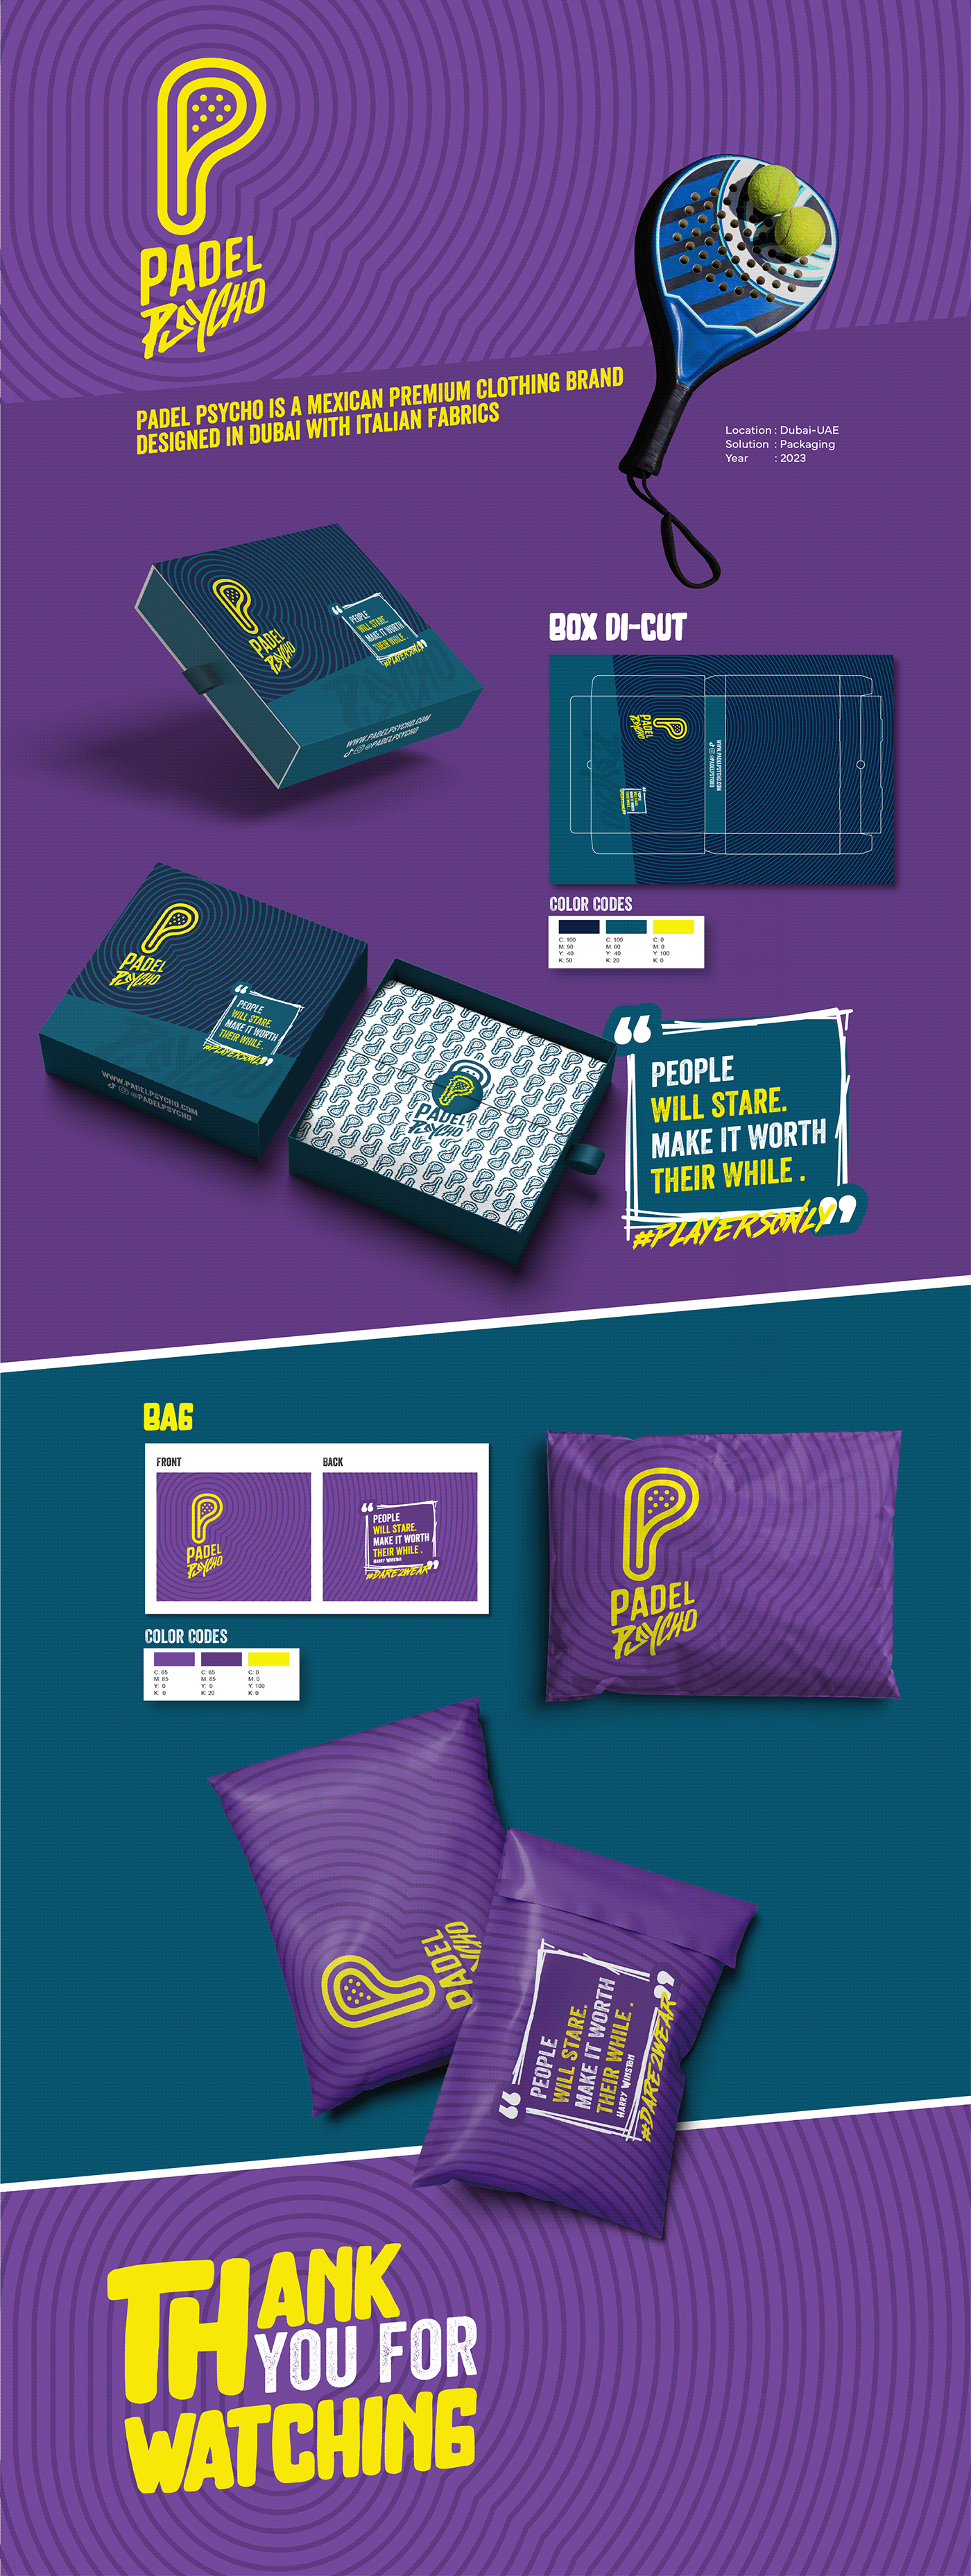 Graphic Designer packaging design Sports Wear apparel Clothing Padel tennis UAE Advertising  branding  identity